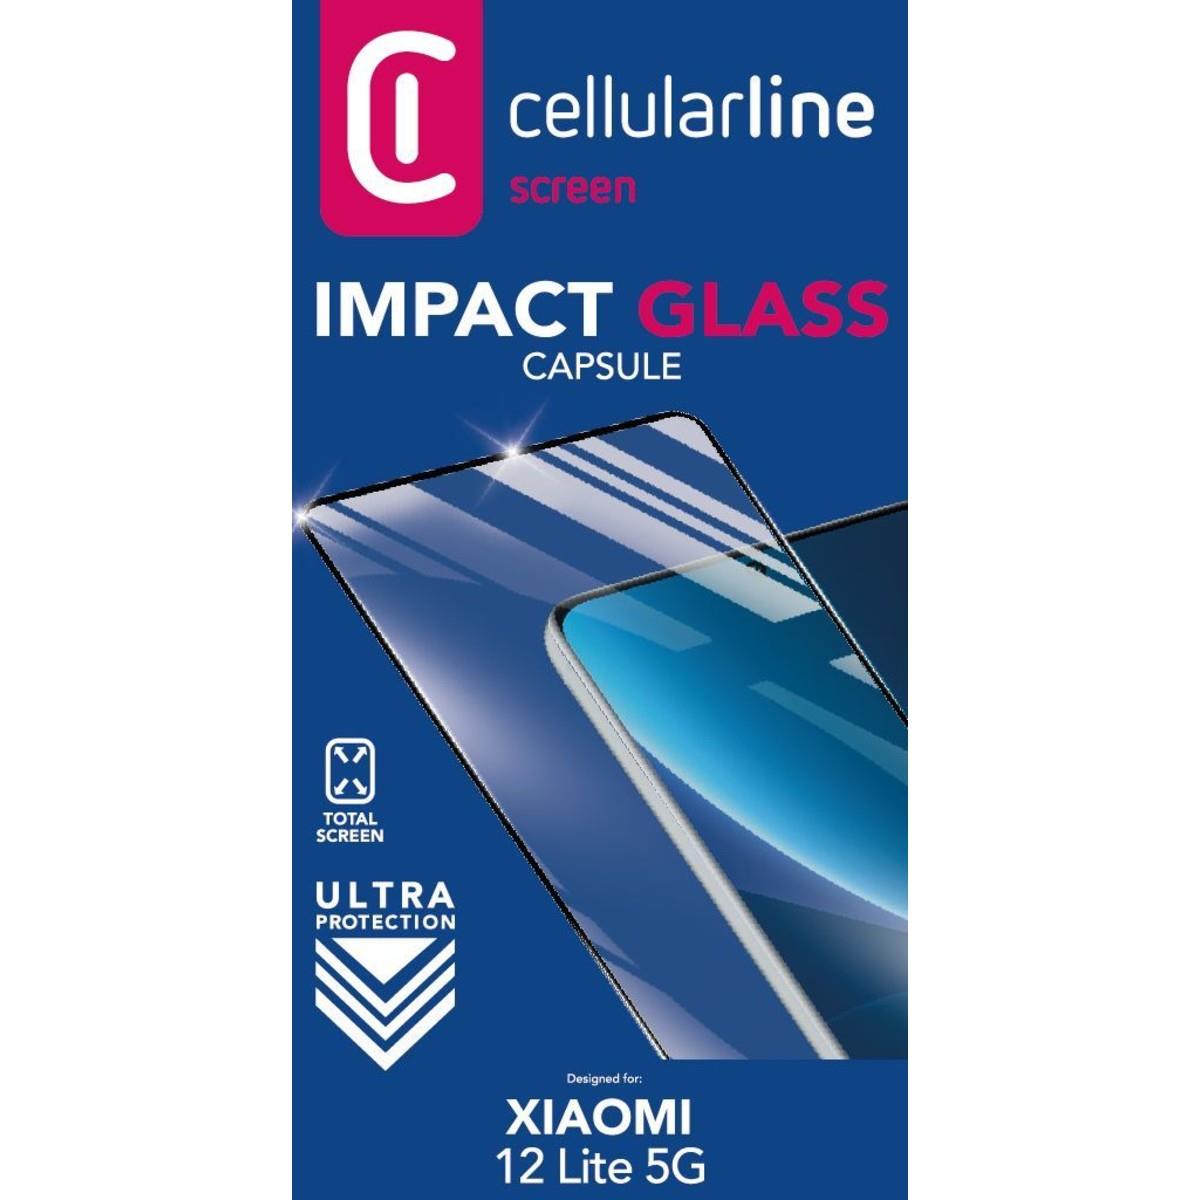 Schutzglas IMPACT GLASS CAPSULE für Xiaomi 12 Lite 5G